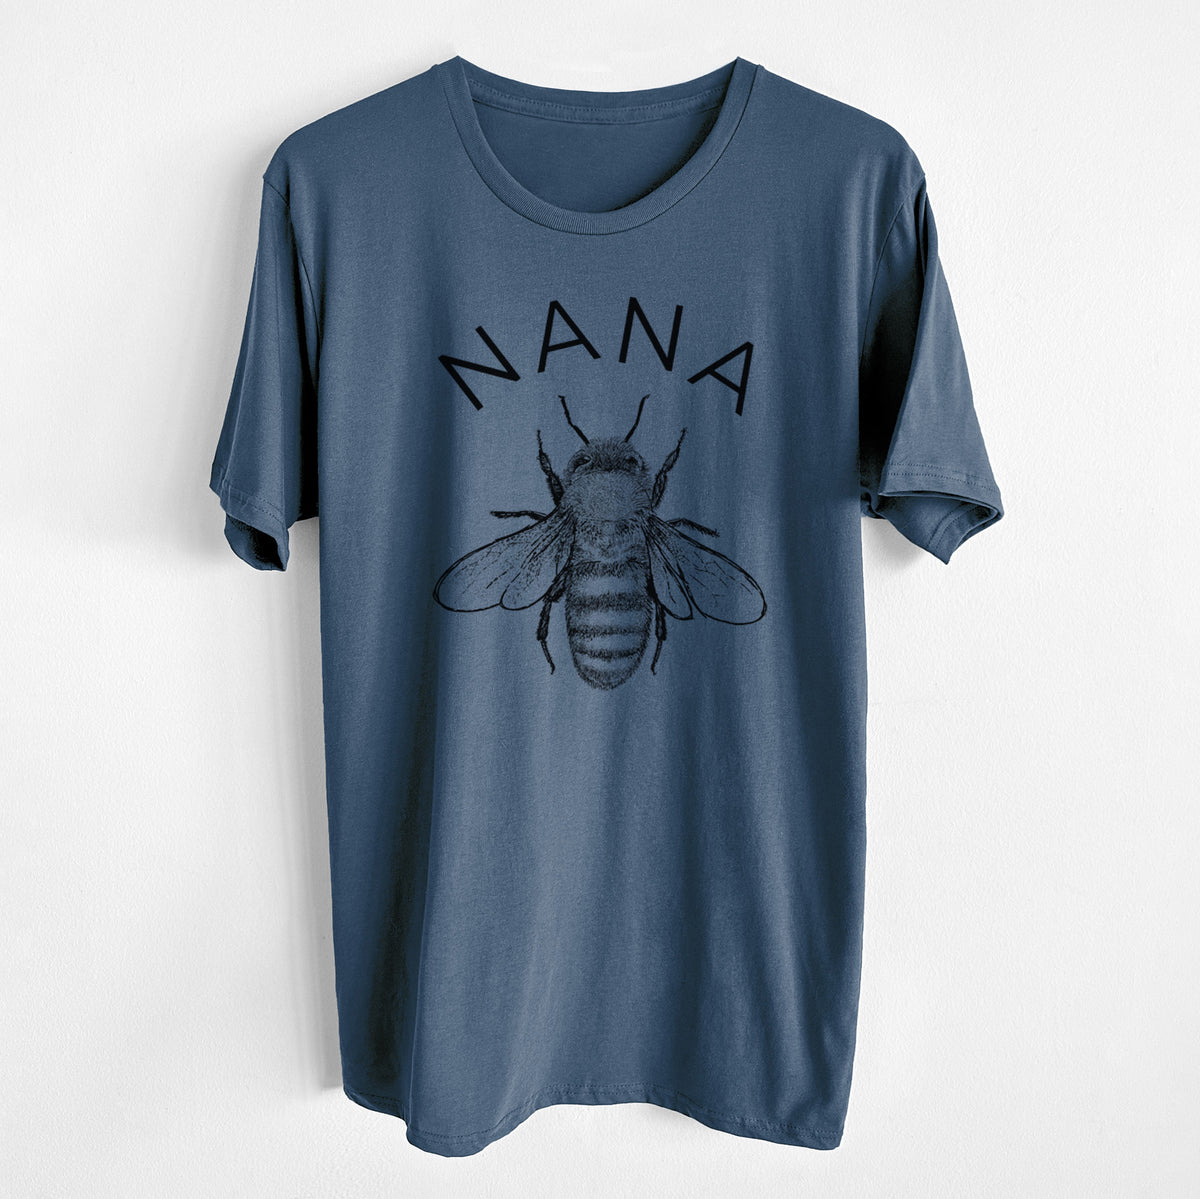 Nana Bee - Unisex Crewneck - Made in USA - 100% Organic Cotton